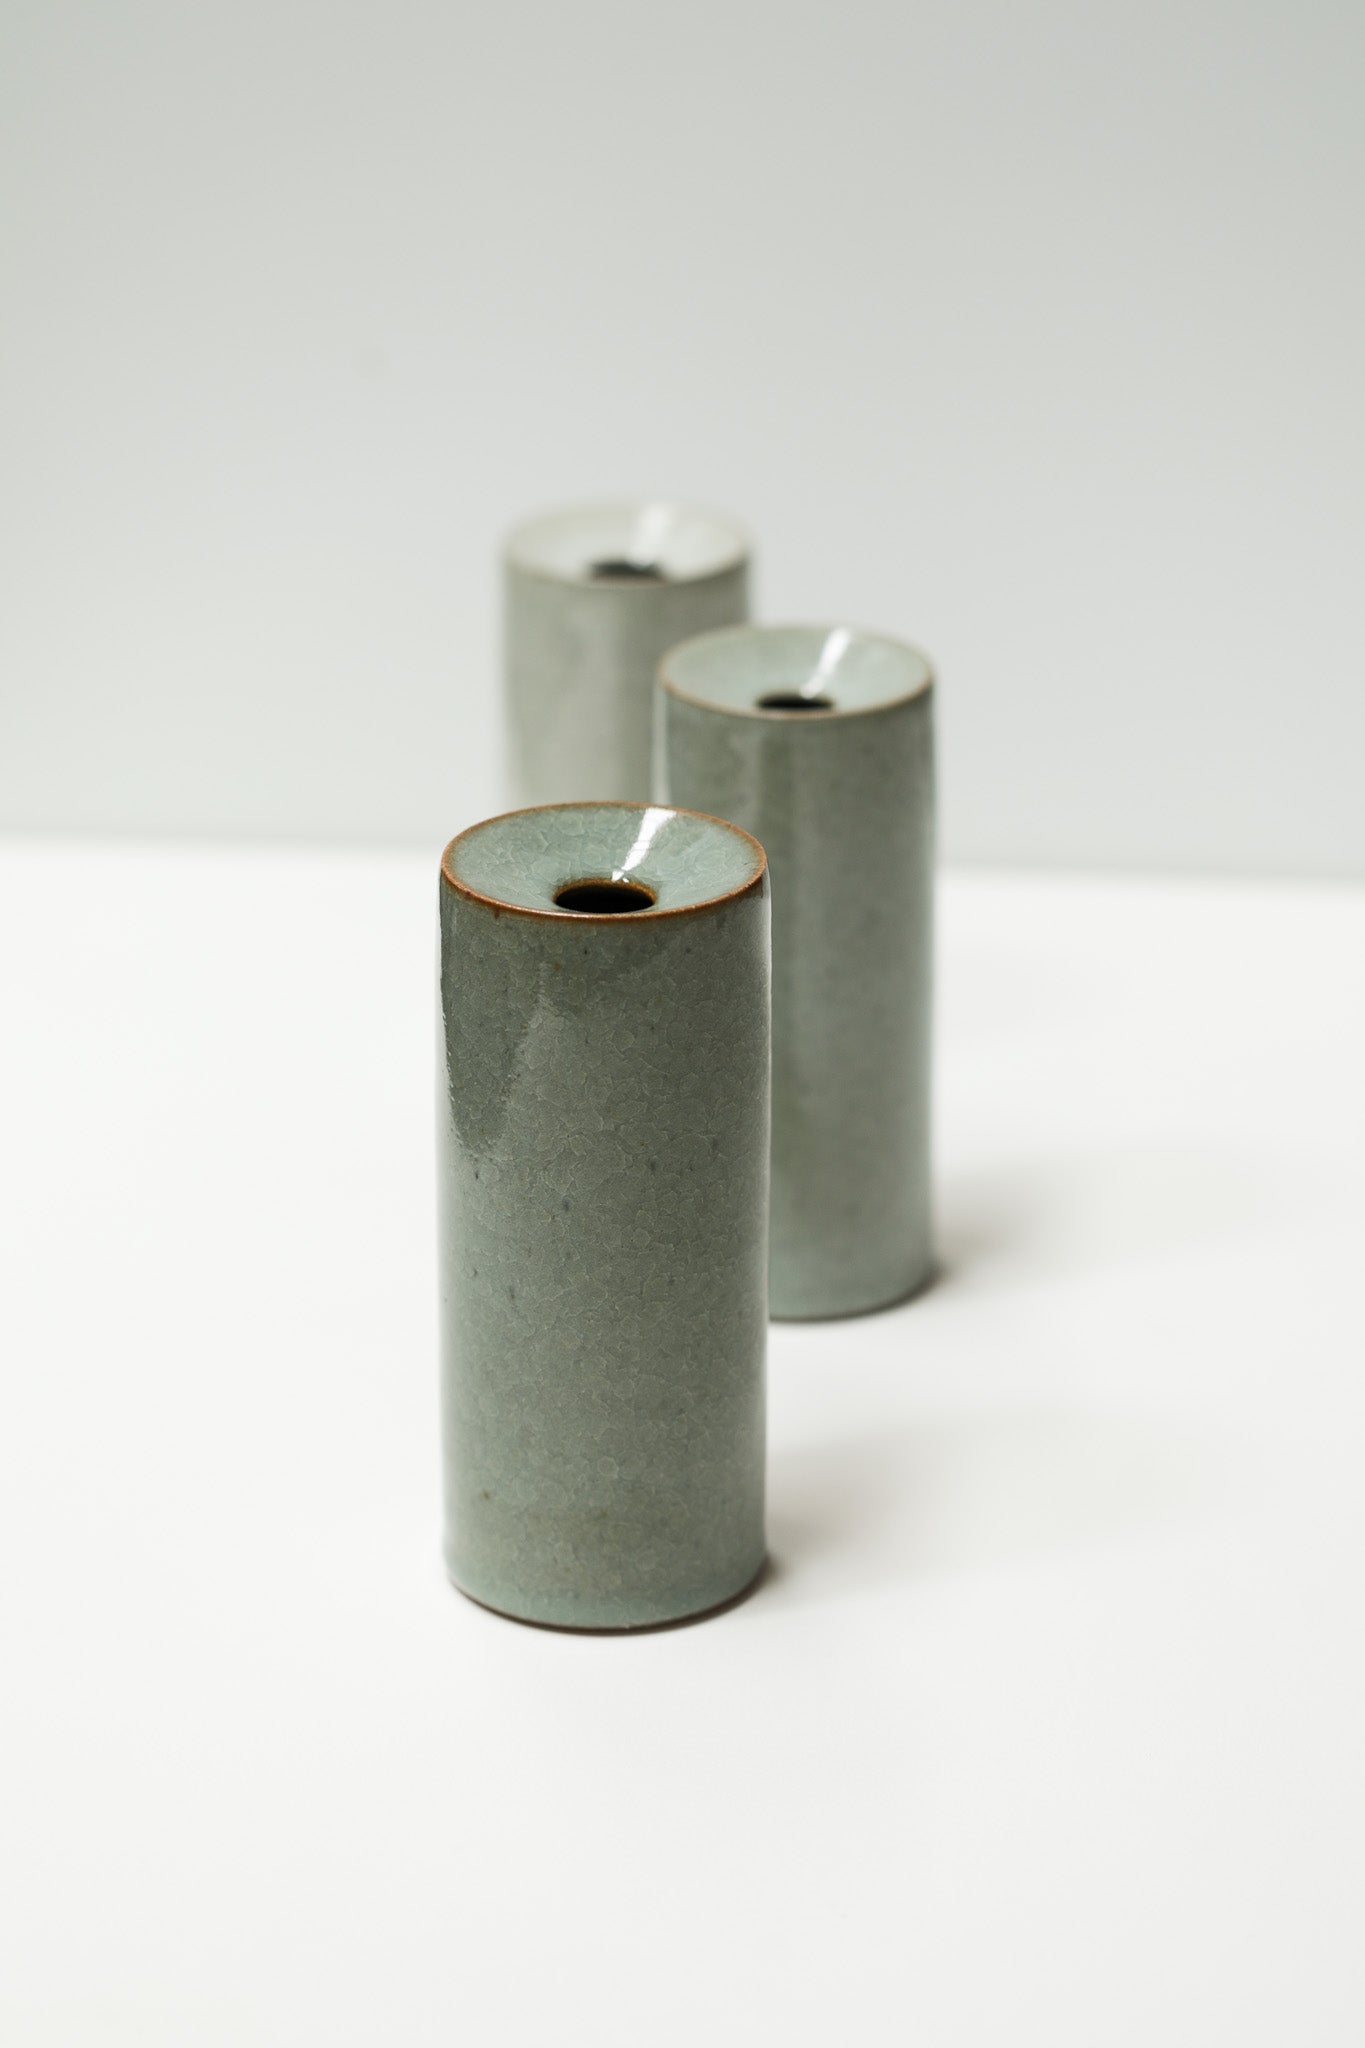 Florian Gadsby: Trio of Bud Vases